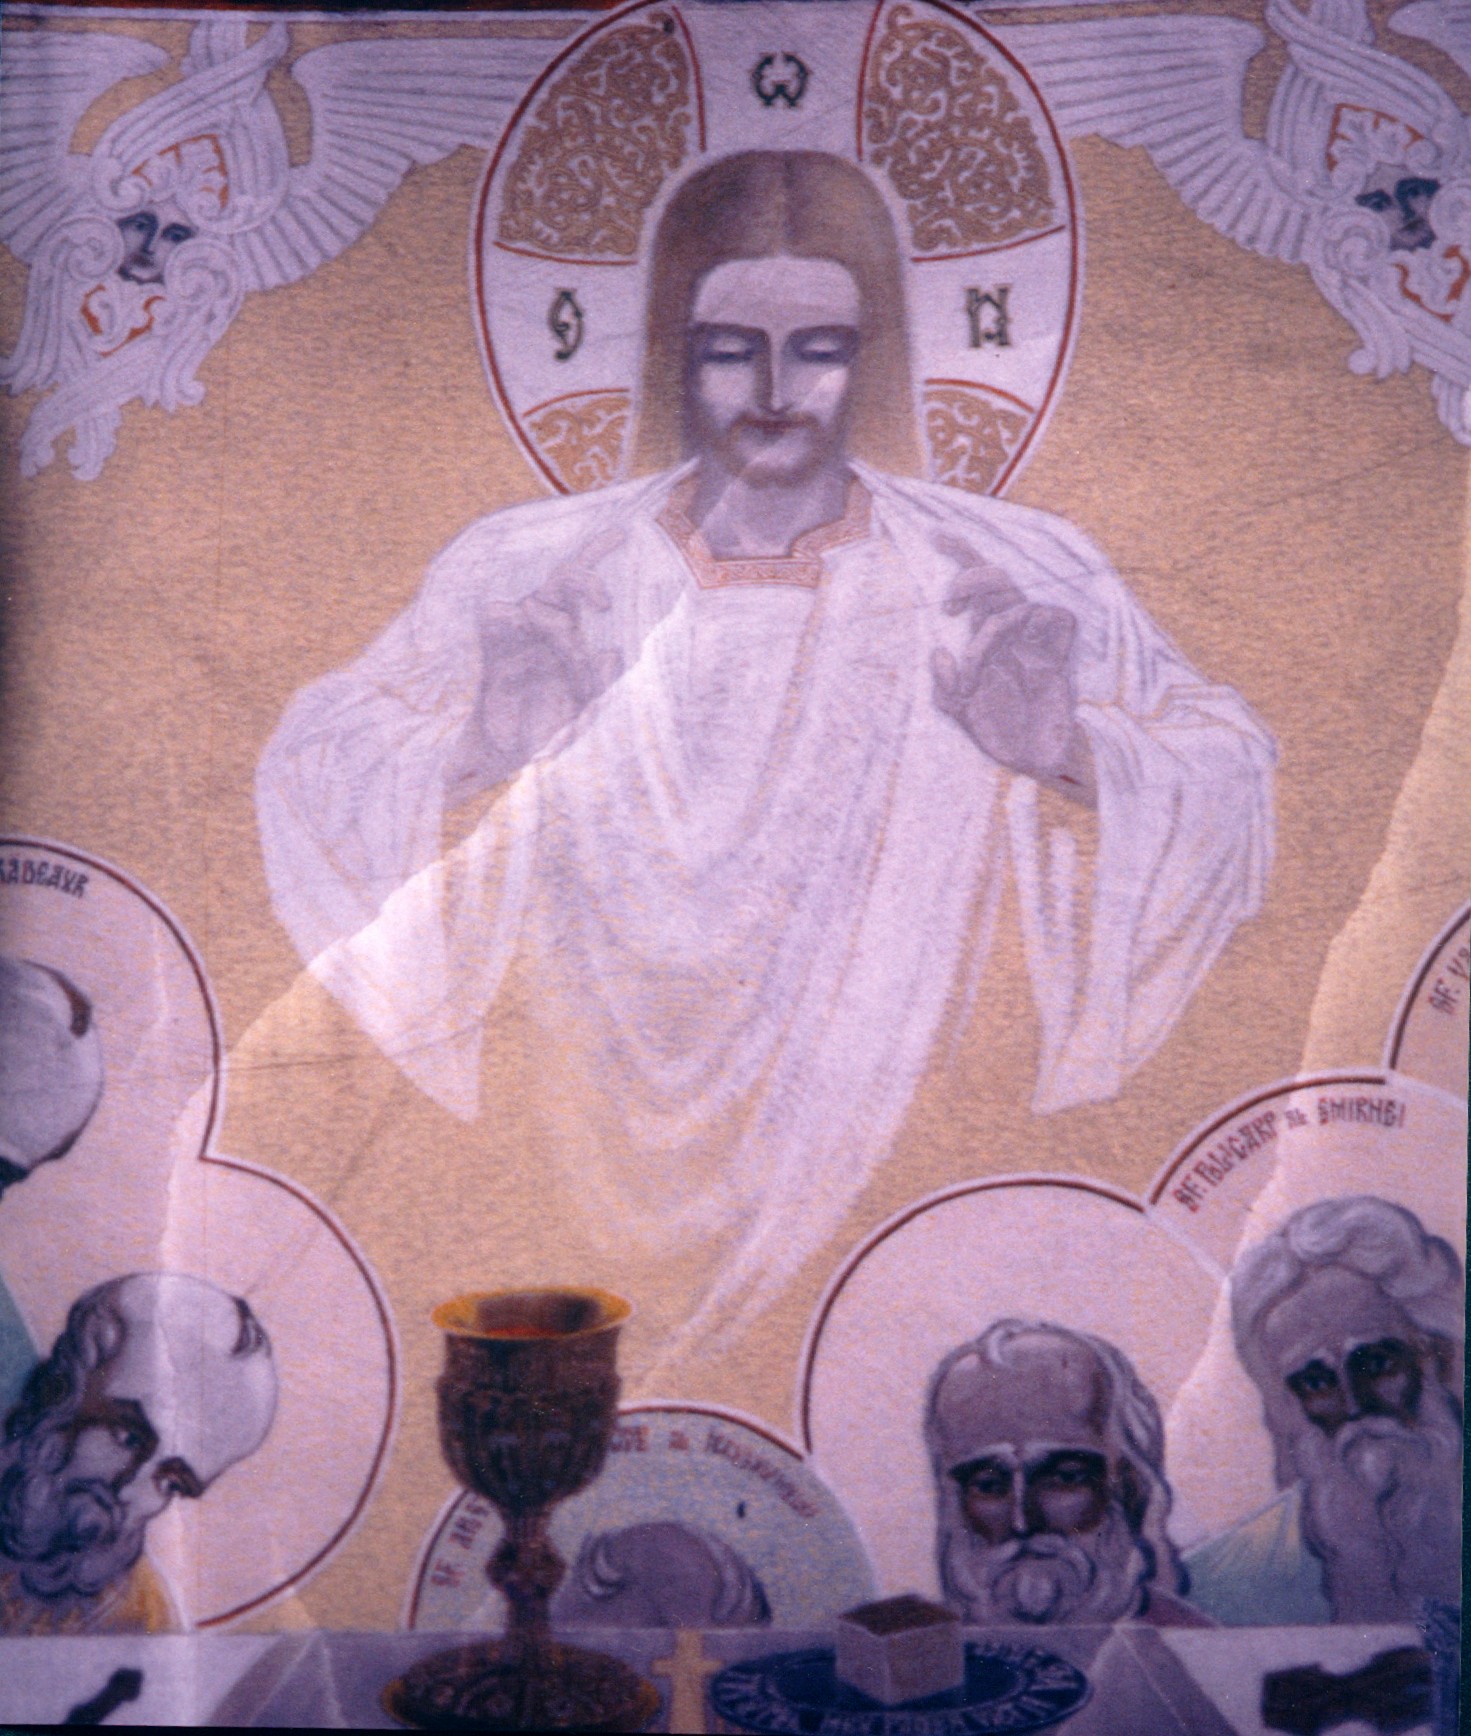 Parintele Arsenie Boca - pictorul de la Biserica Draganescu